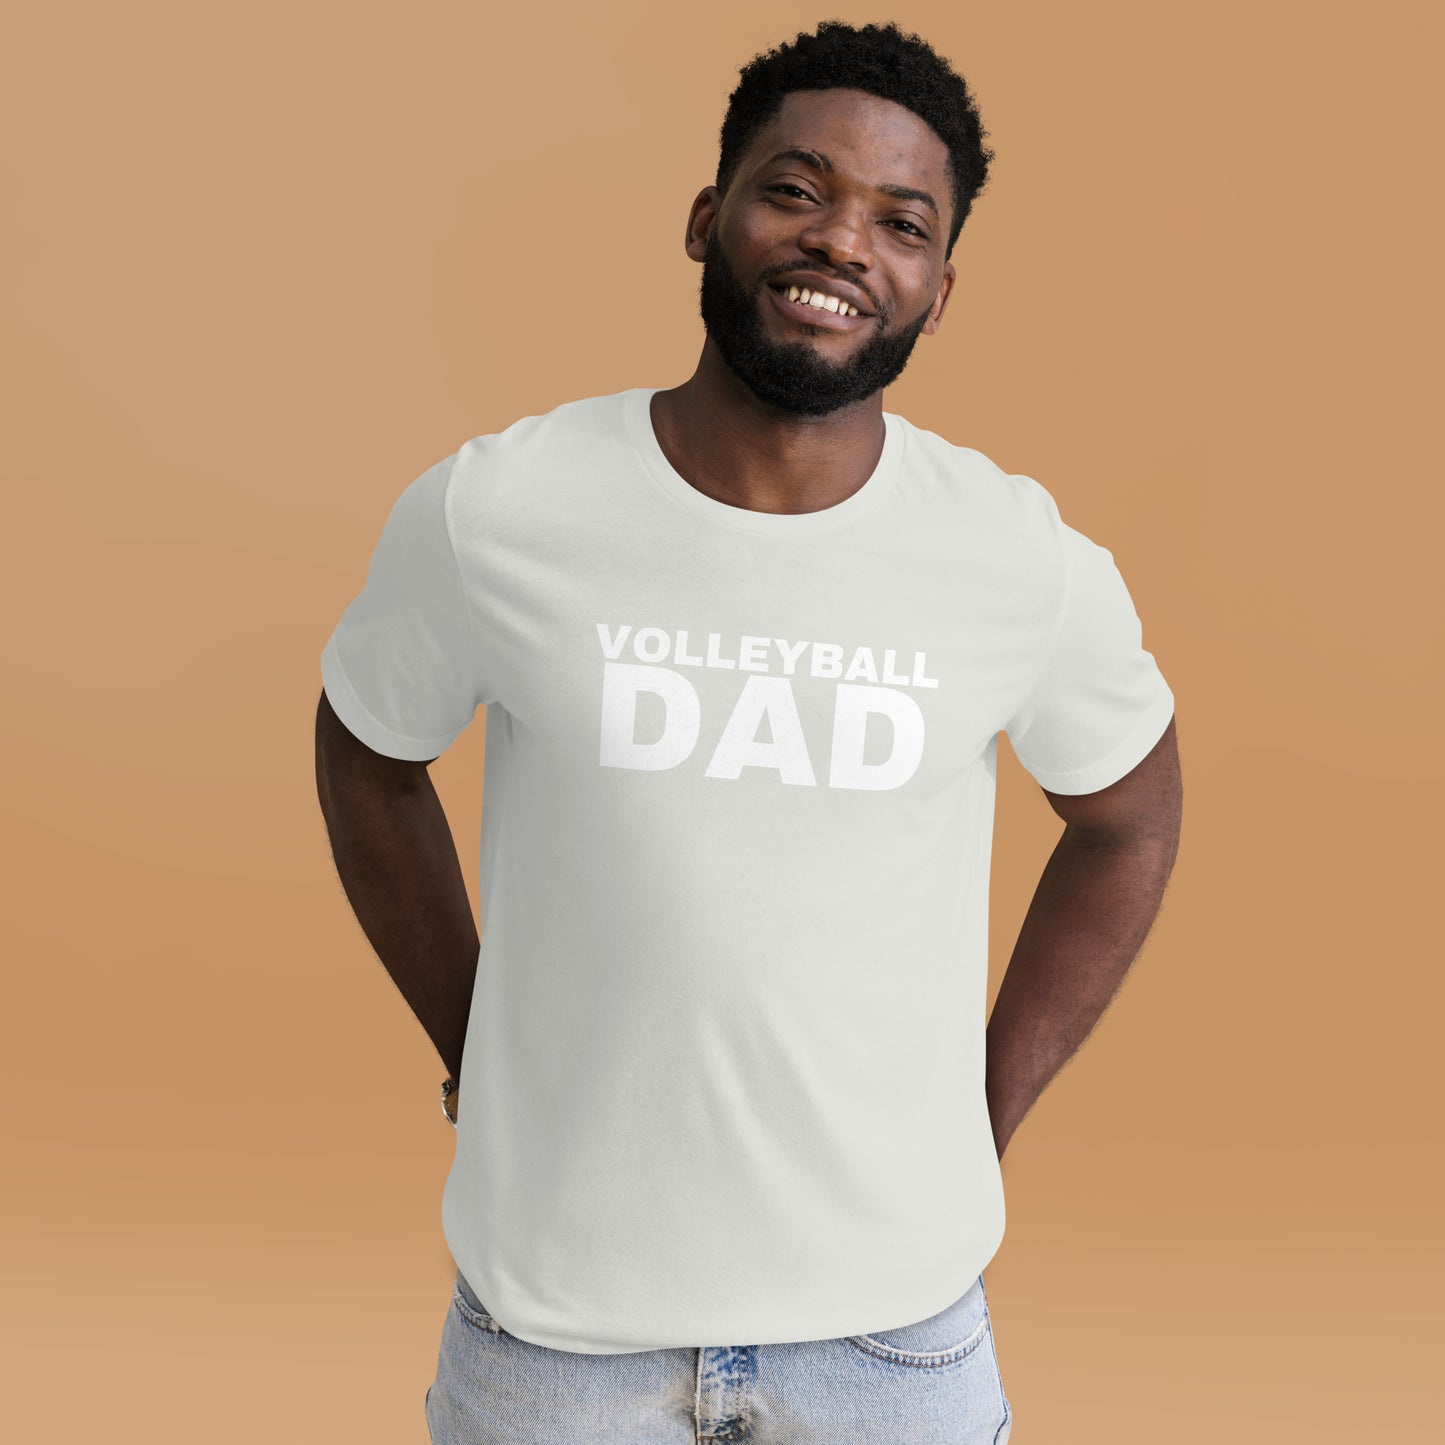 Volleyball Dad - Unisex t-shirt